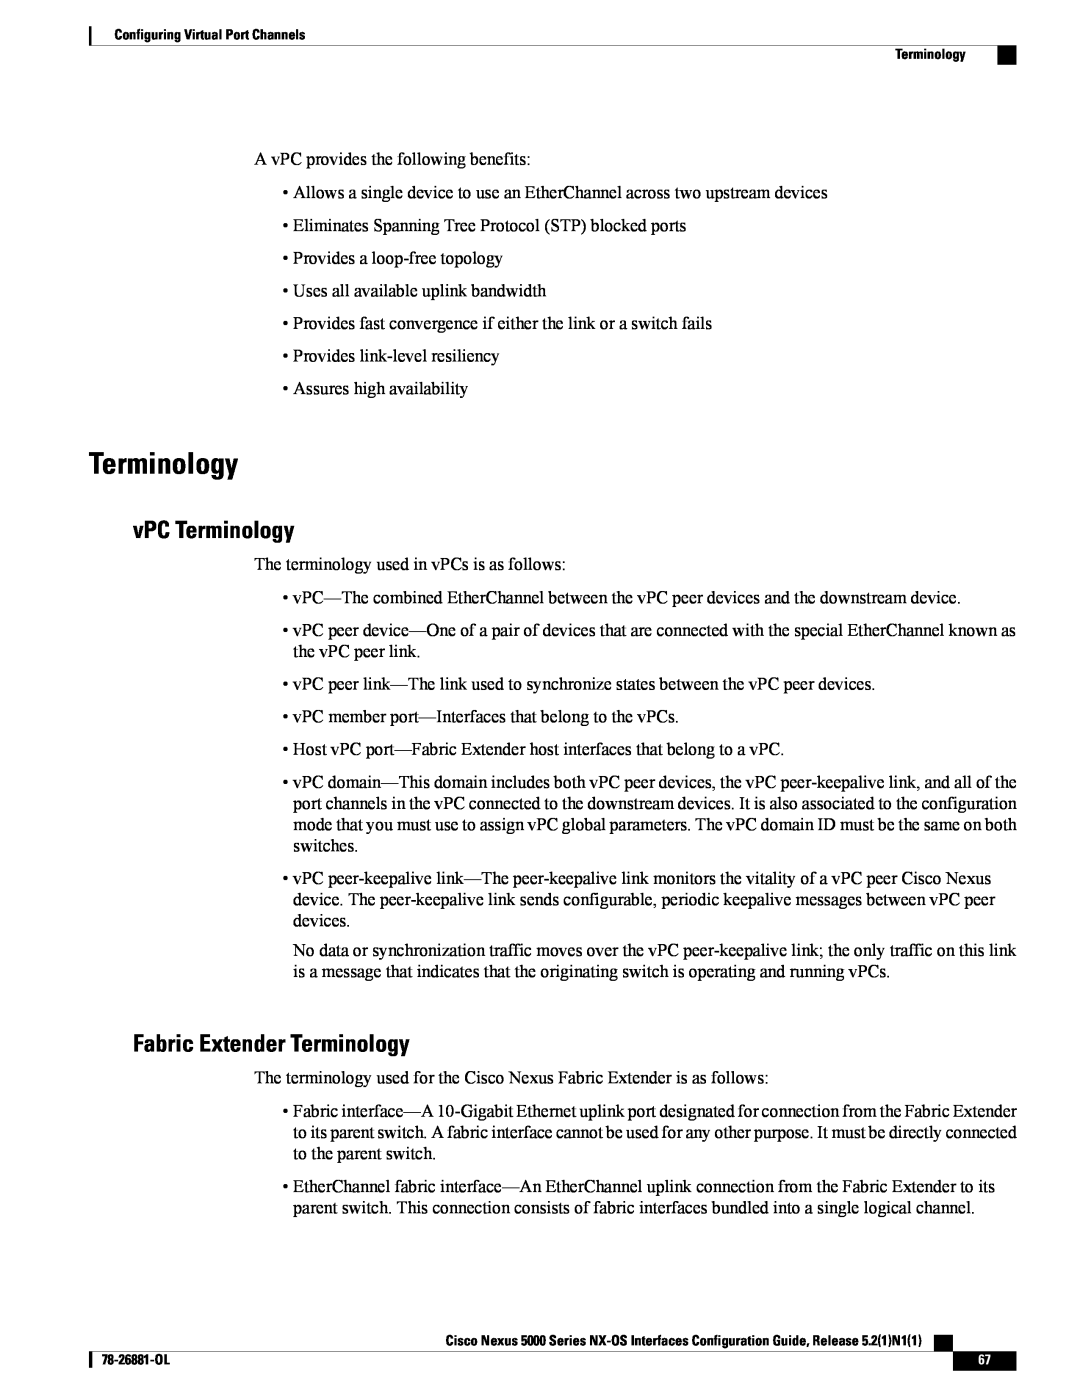 Cisco Systems N5KC5596TFA manual vPC Terminology, Fabric Extender Terminology 